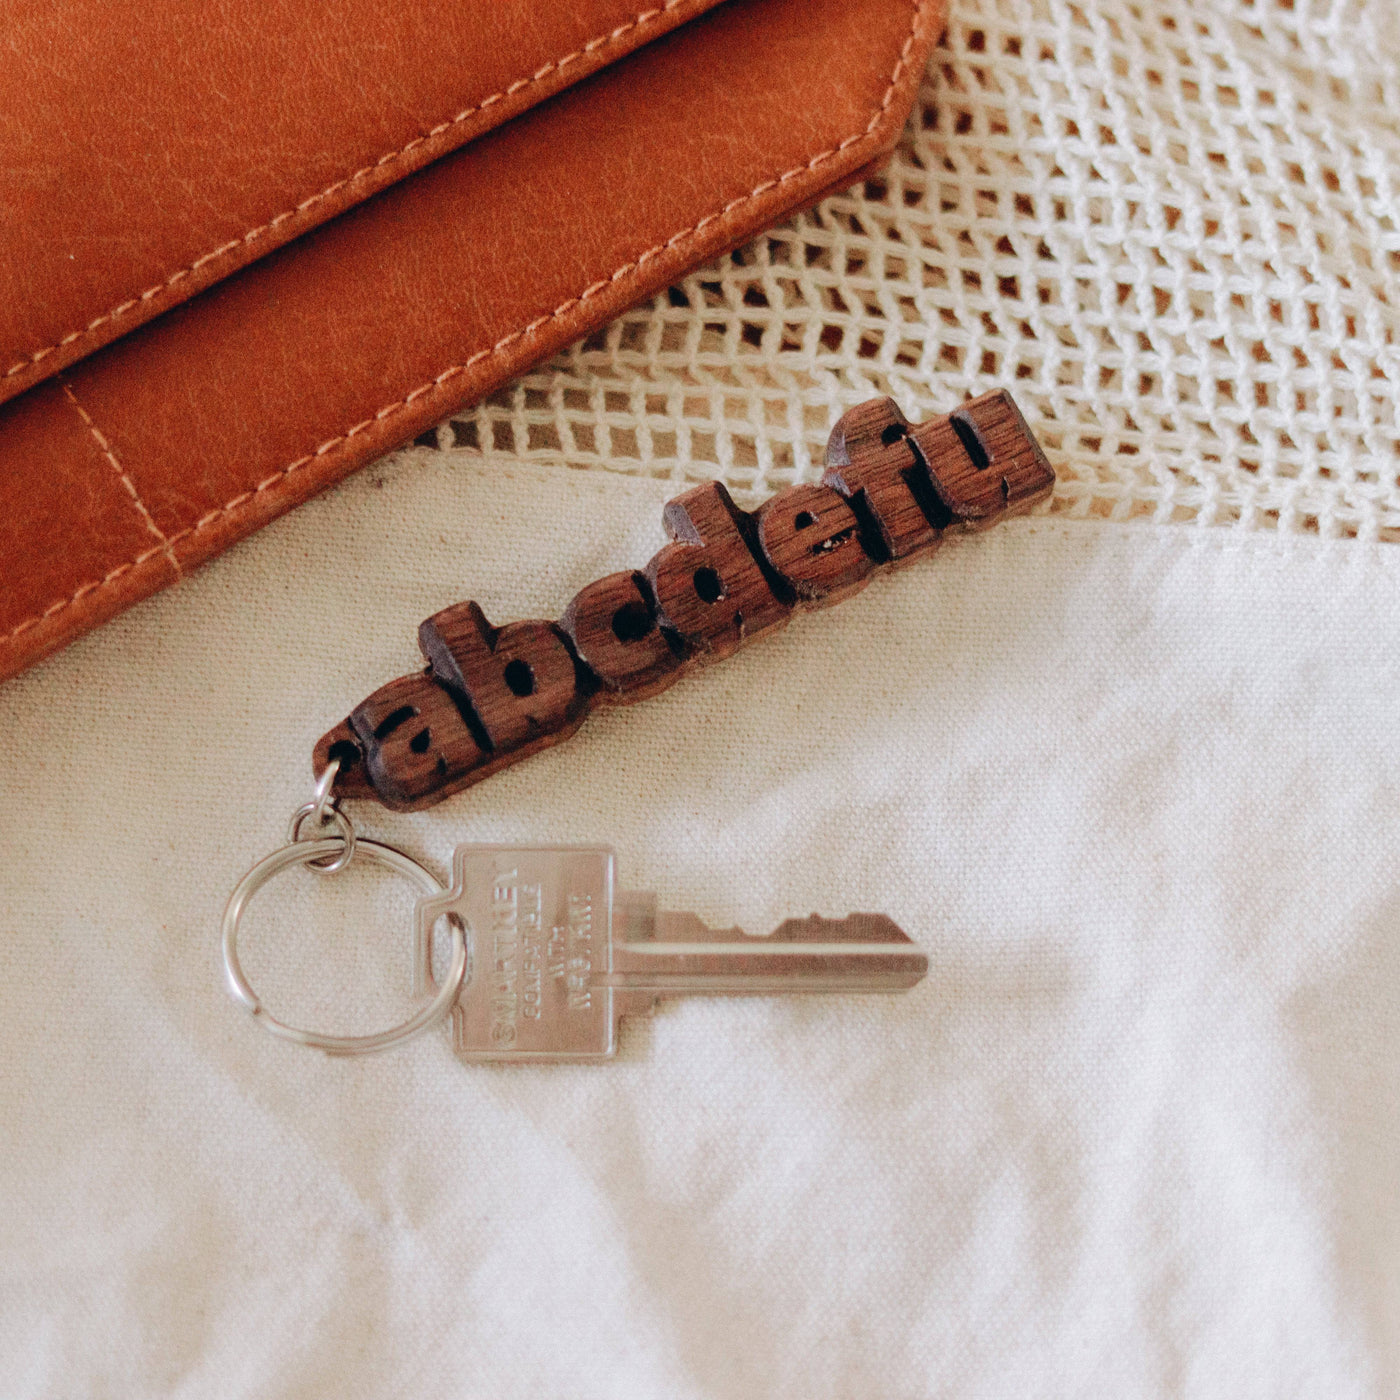 abcdefu | Wood Keychain - The Local Space